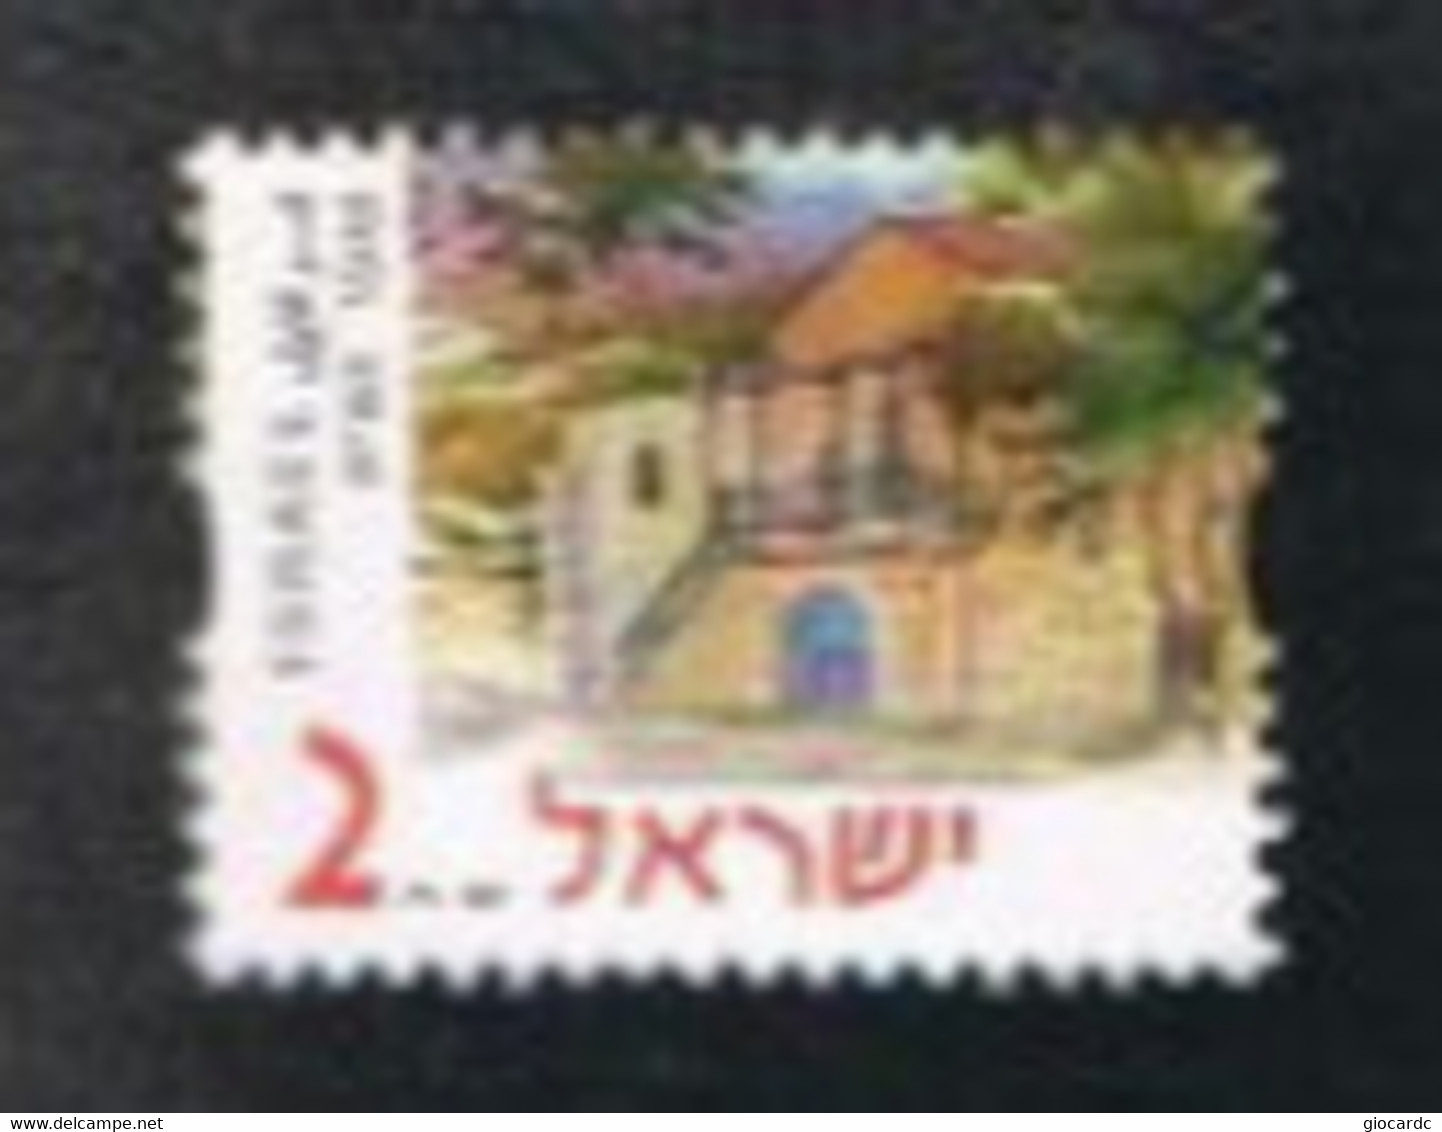 ISRAELE (ISRAEL)  - SG 1551   - 2001  SITES: SHAAR HAGAY INN - USED ° - Oblitérés (sans Tabs)